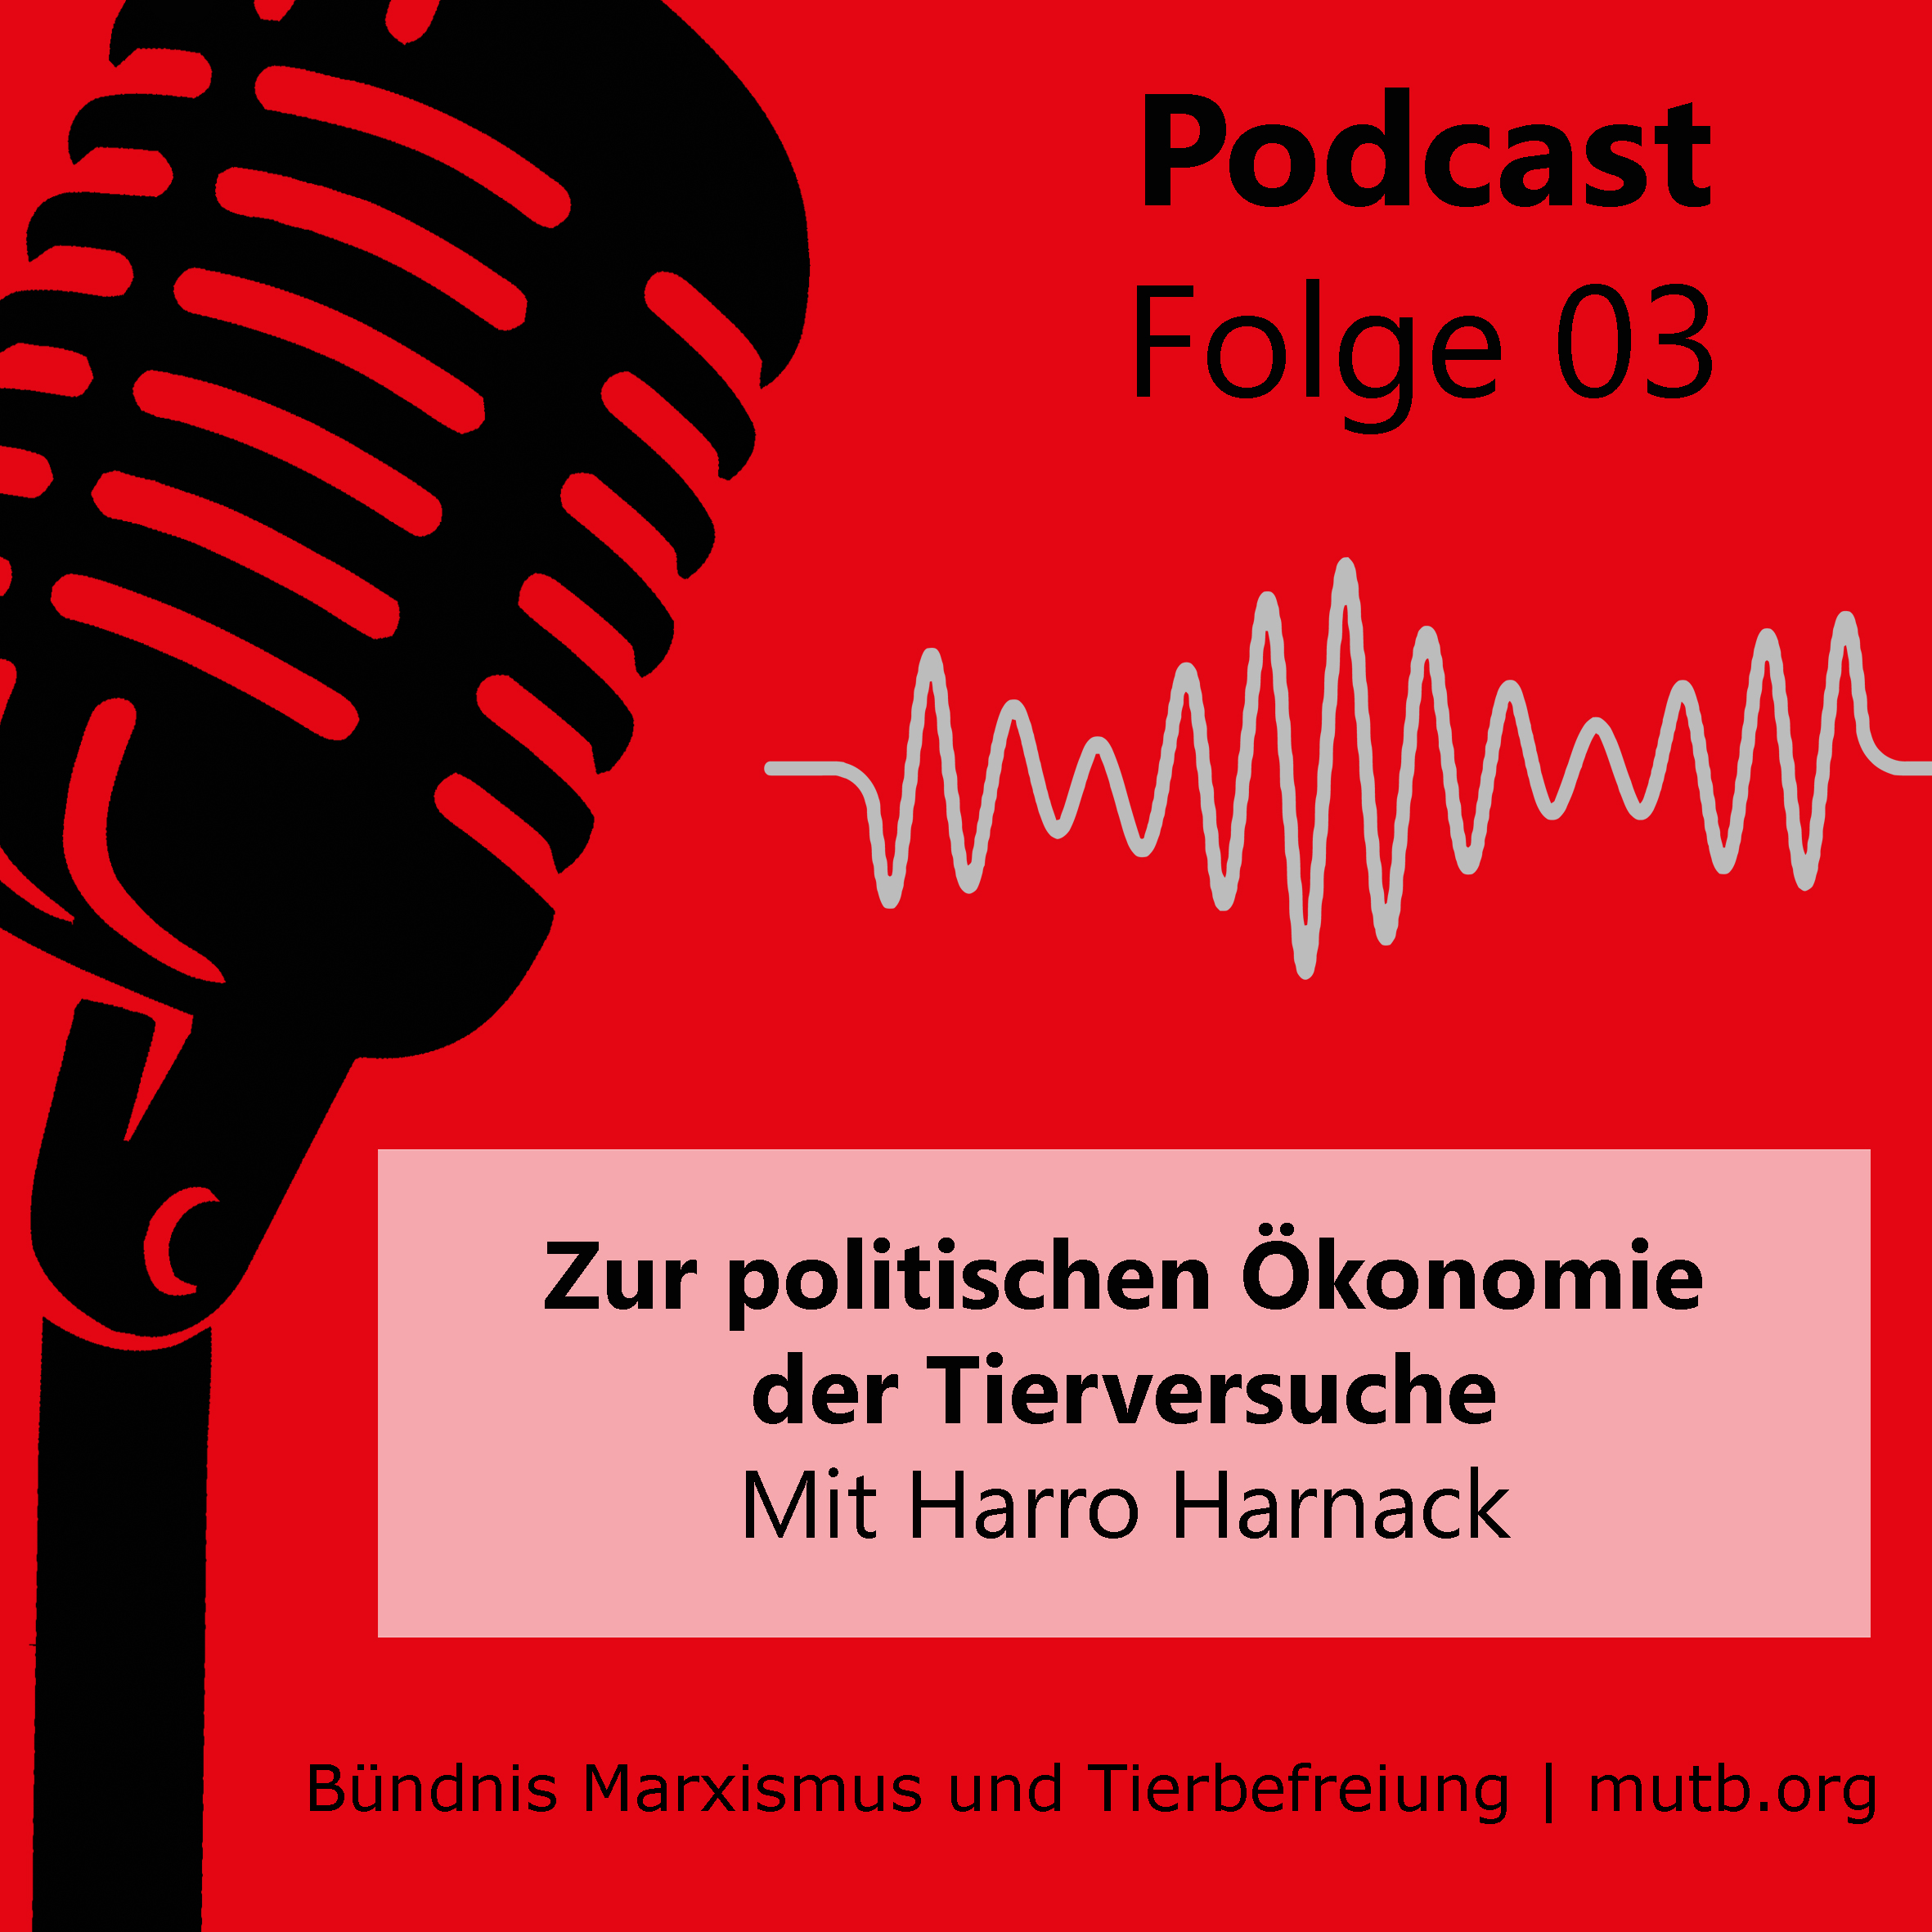 Podcast episode 03: mit Harro Harnack